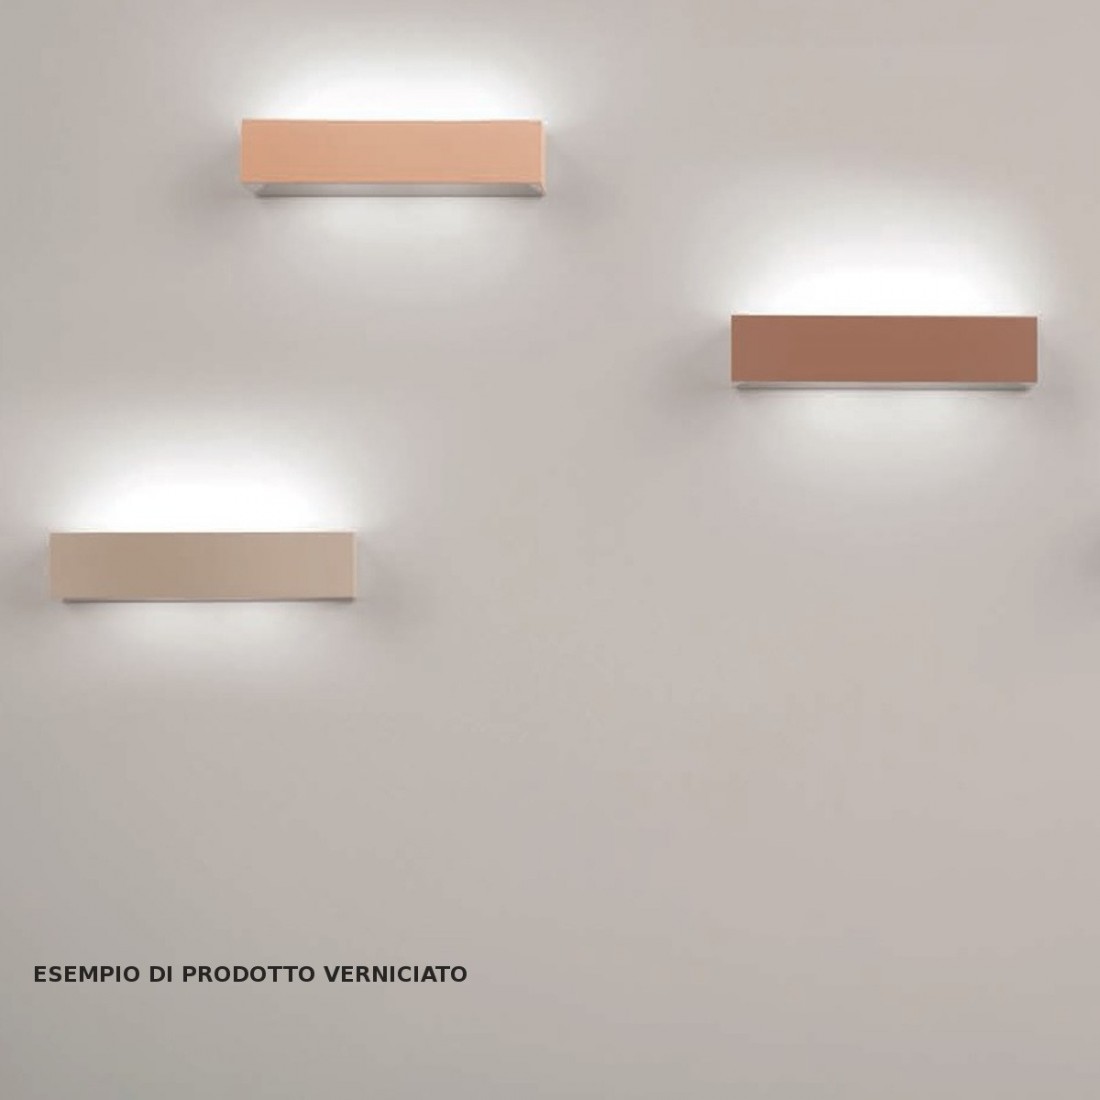 Applique SF-HERMIONE T210 G9 LED 52.5CM gesso bianco verniciabile lampada parete biemissione luce indiretta interno